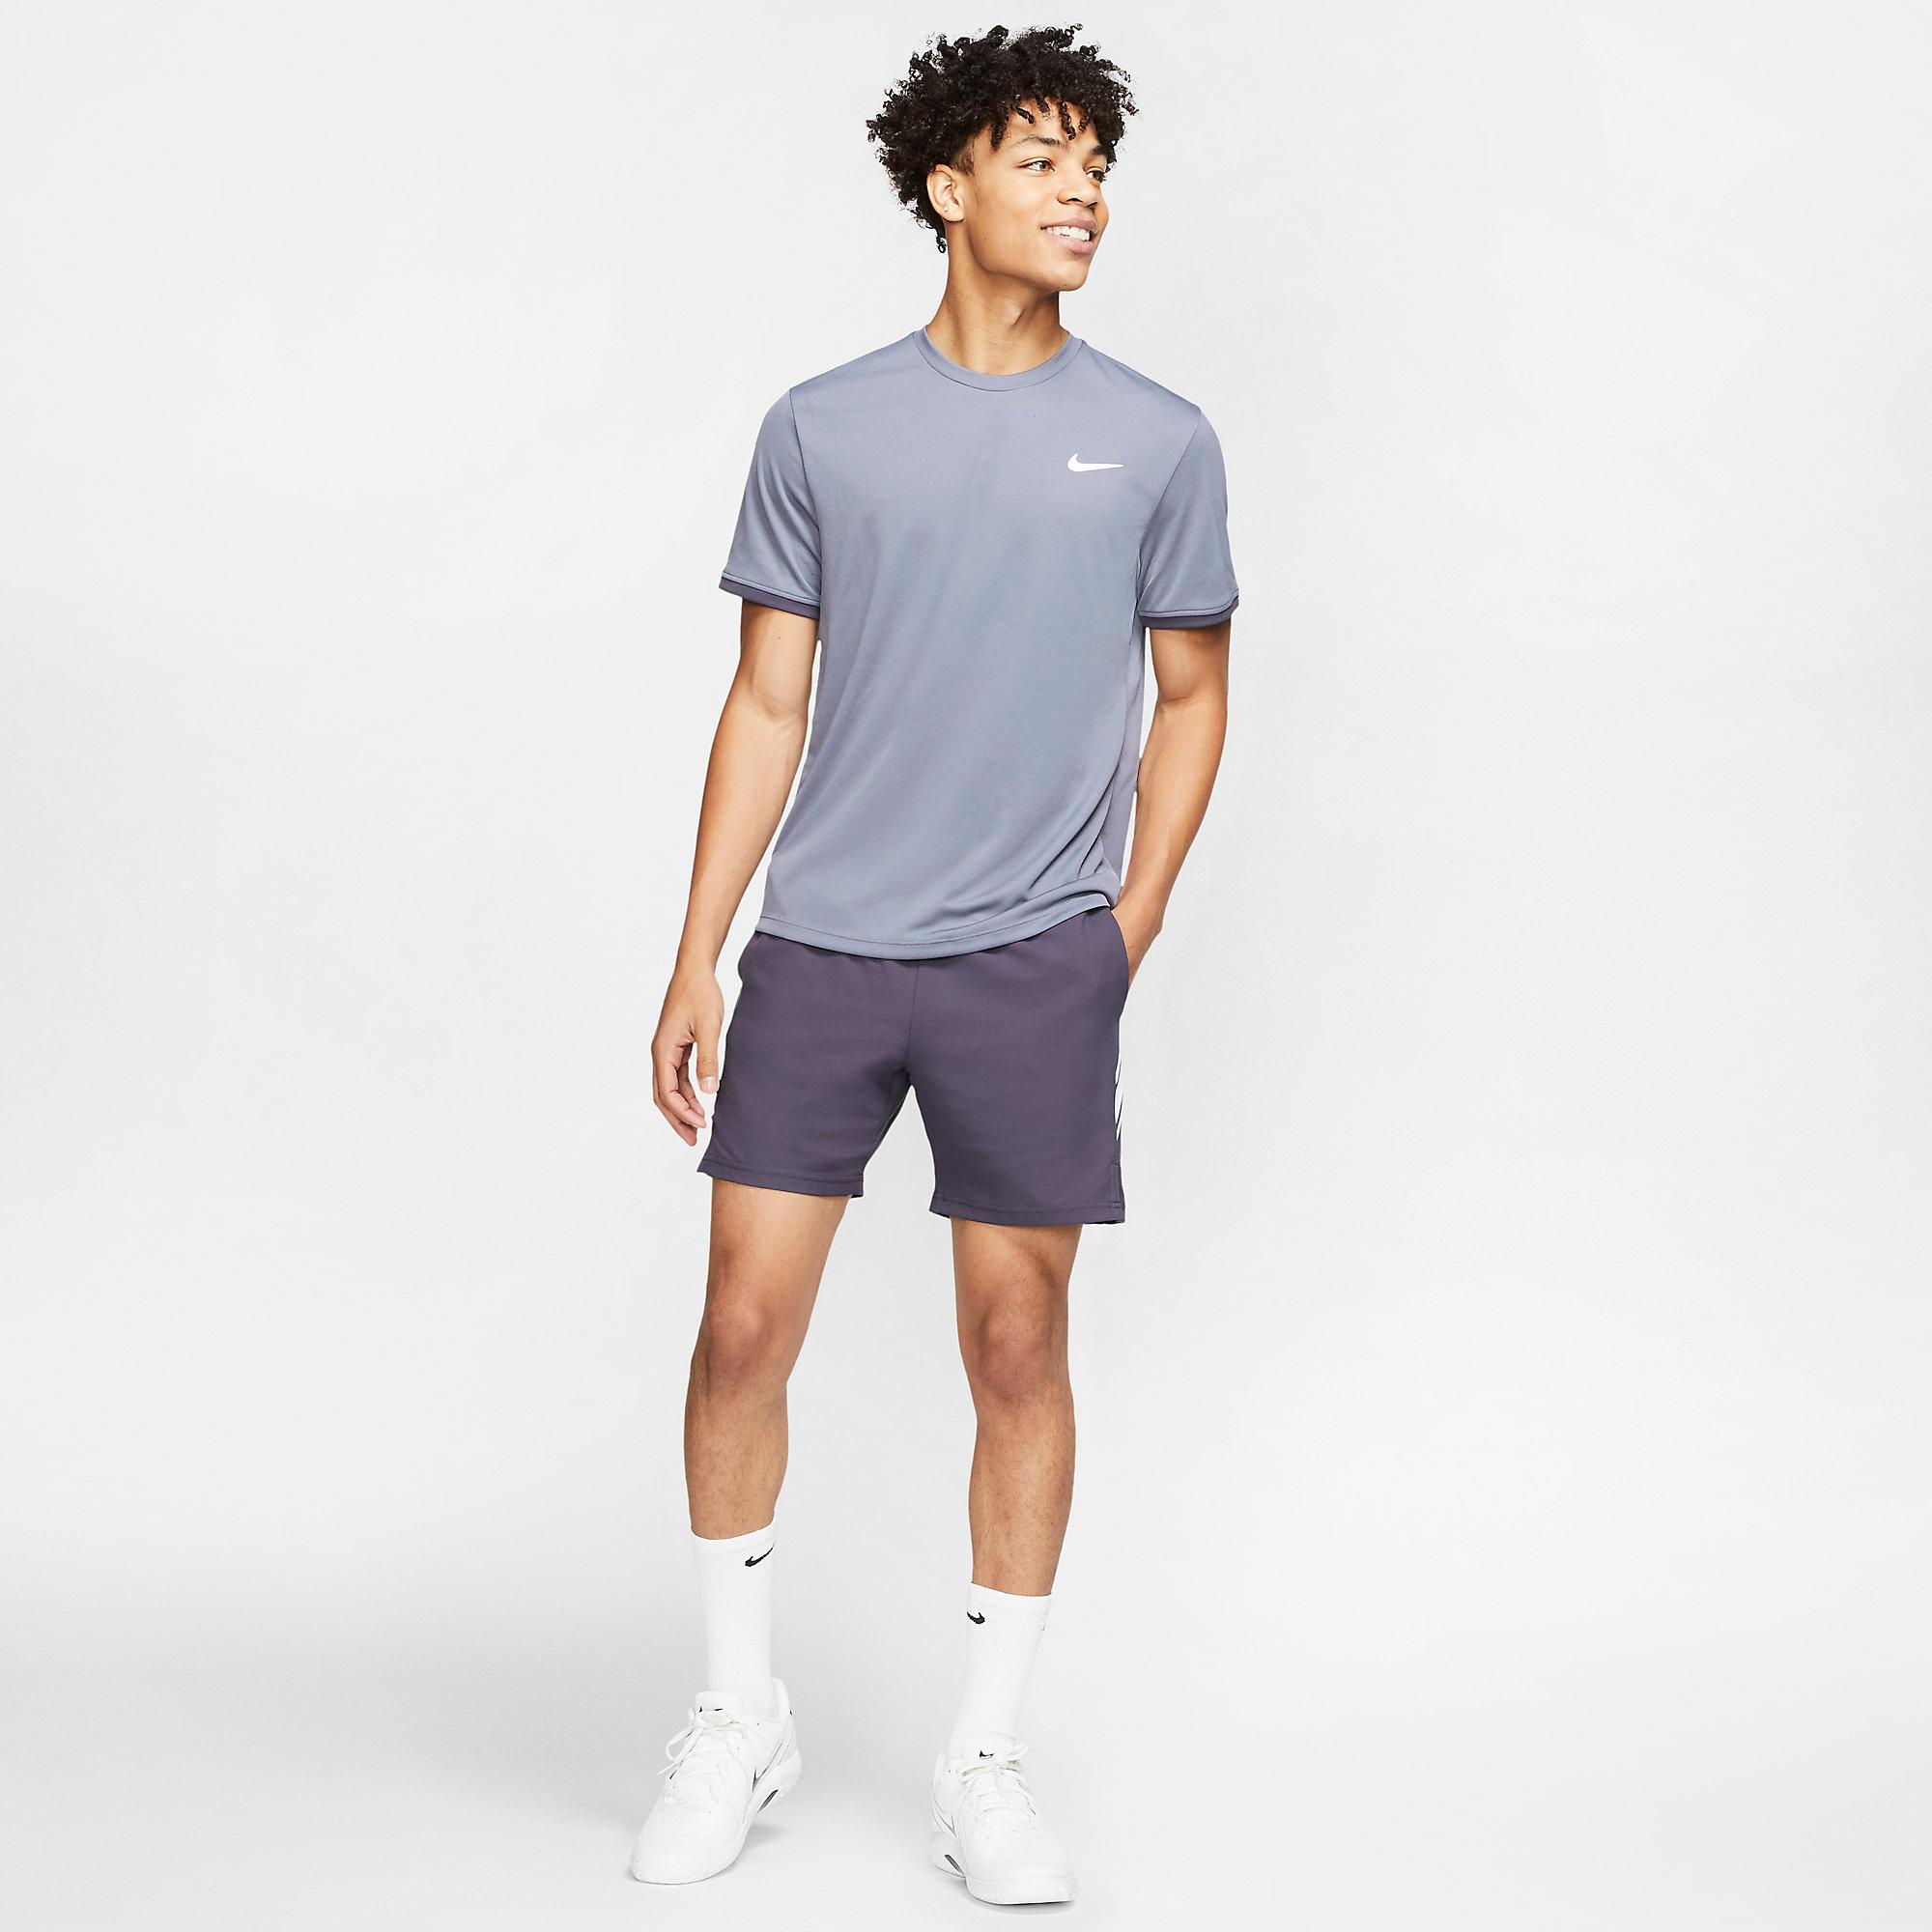 Nike Mens Dri-FIT 7 Inch Tennis Shorts - Gridiron/White - Tennisnuts.com